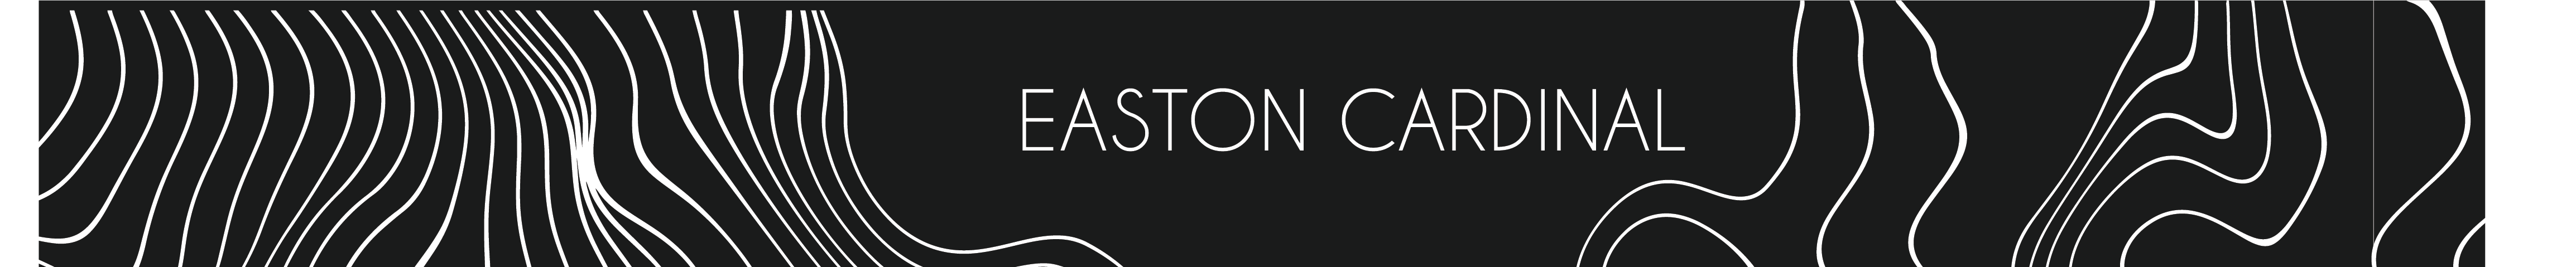 Easton Cardinal's profile banner